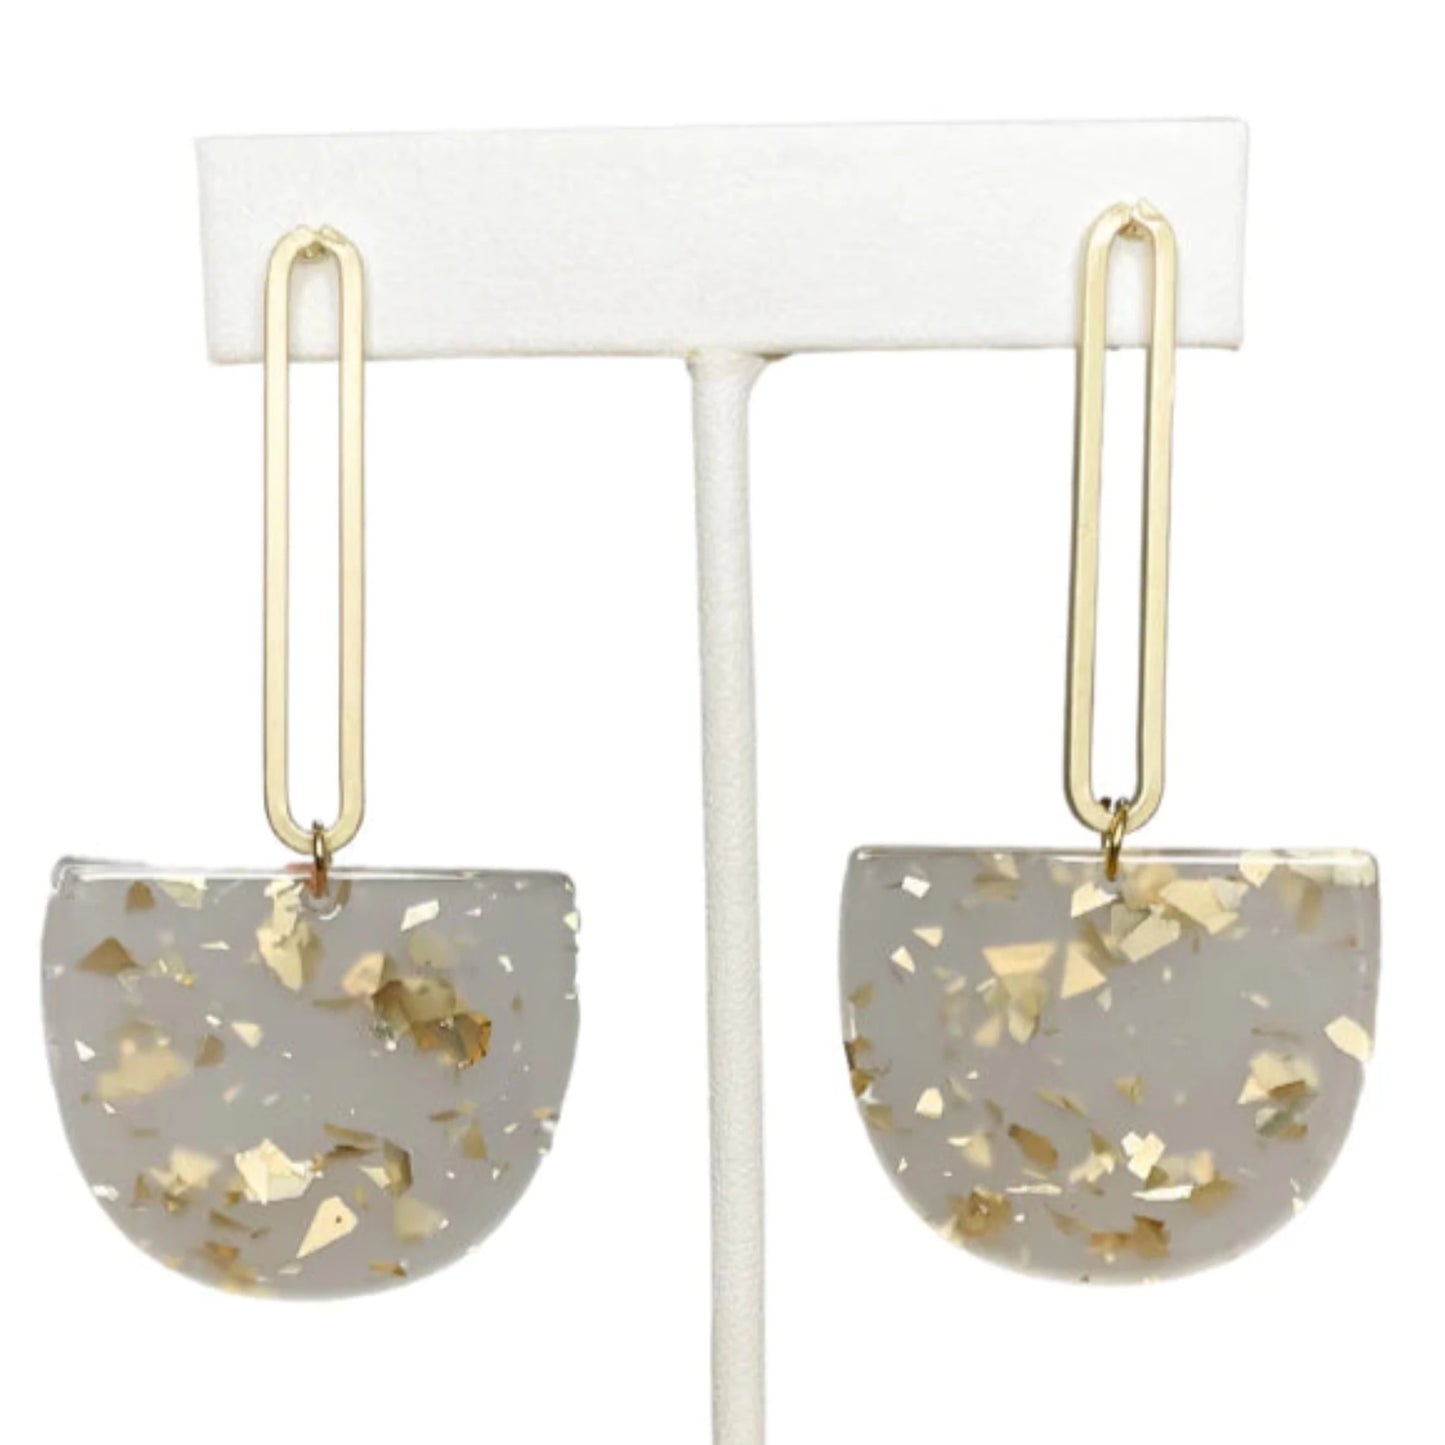 Gold Hannah Earrings by Millie B.